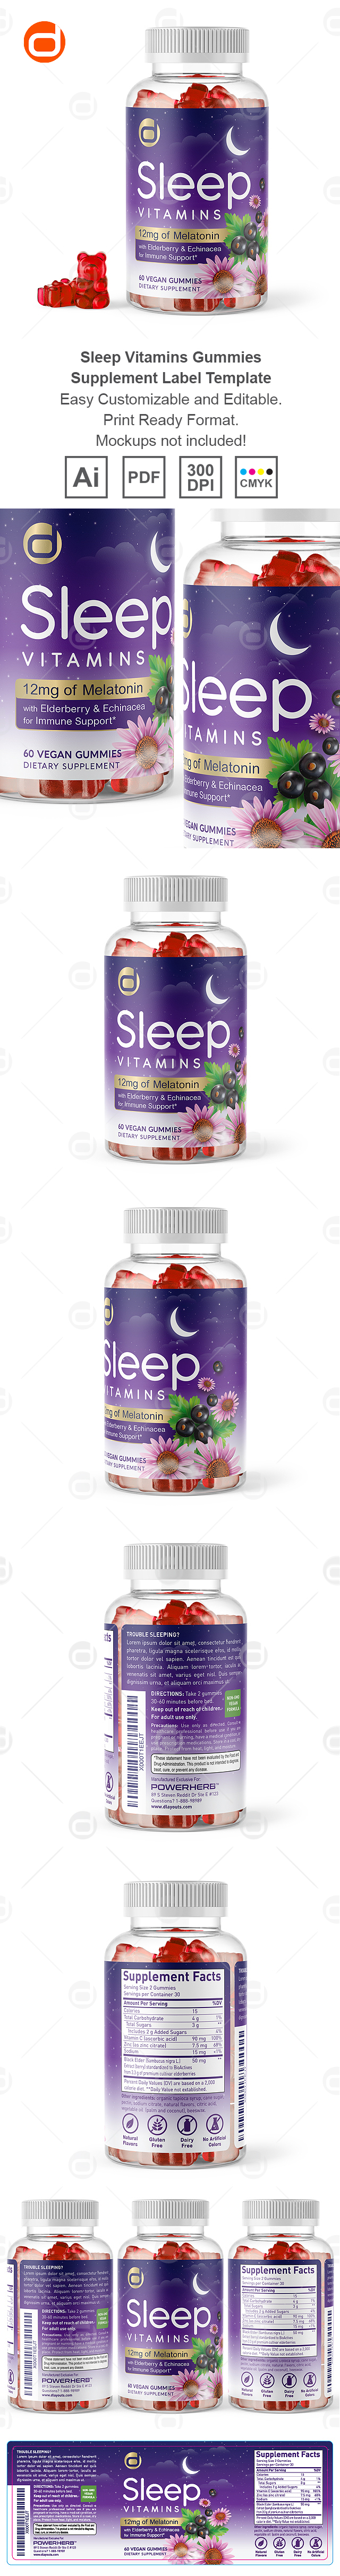 Sleep Vitamins Gummies Supplement Label Template